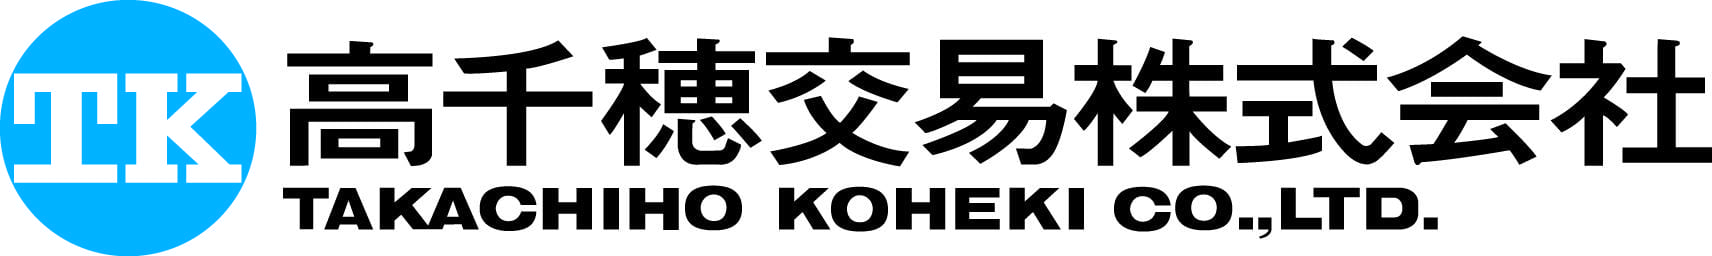 Takachiho Koheki co., LTD.